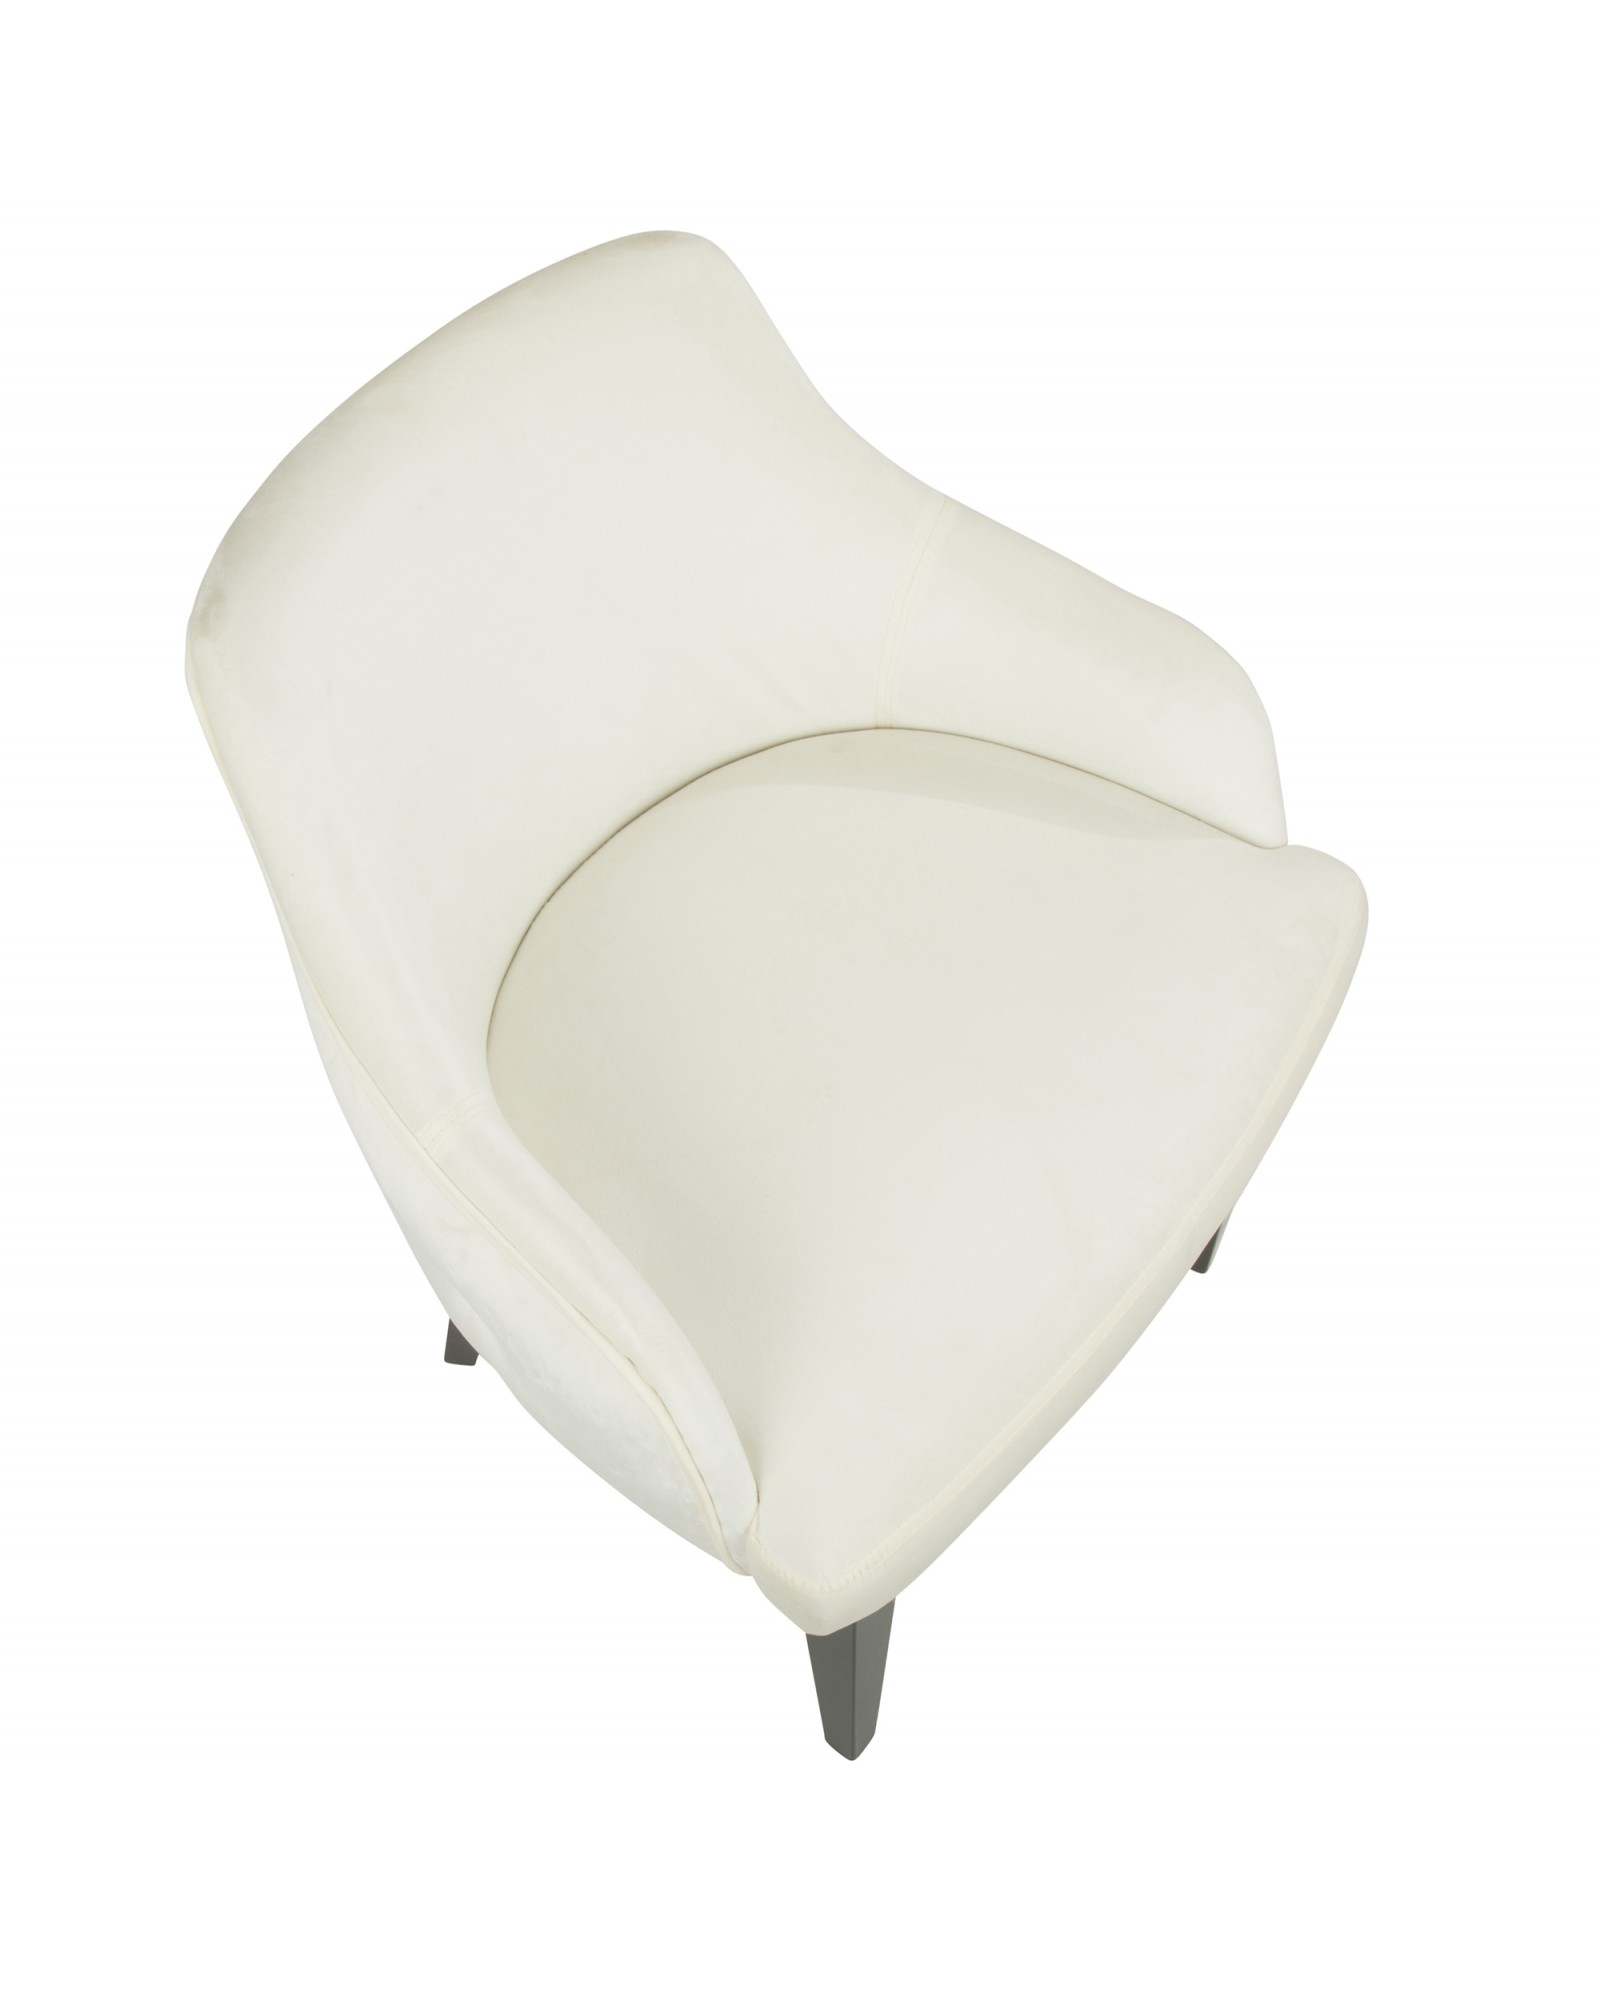 Eliza Contemporary Dining Chair in Espresso with Cream Velvet - Set of 2